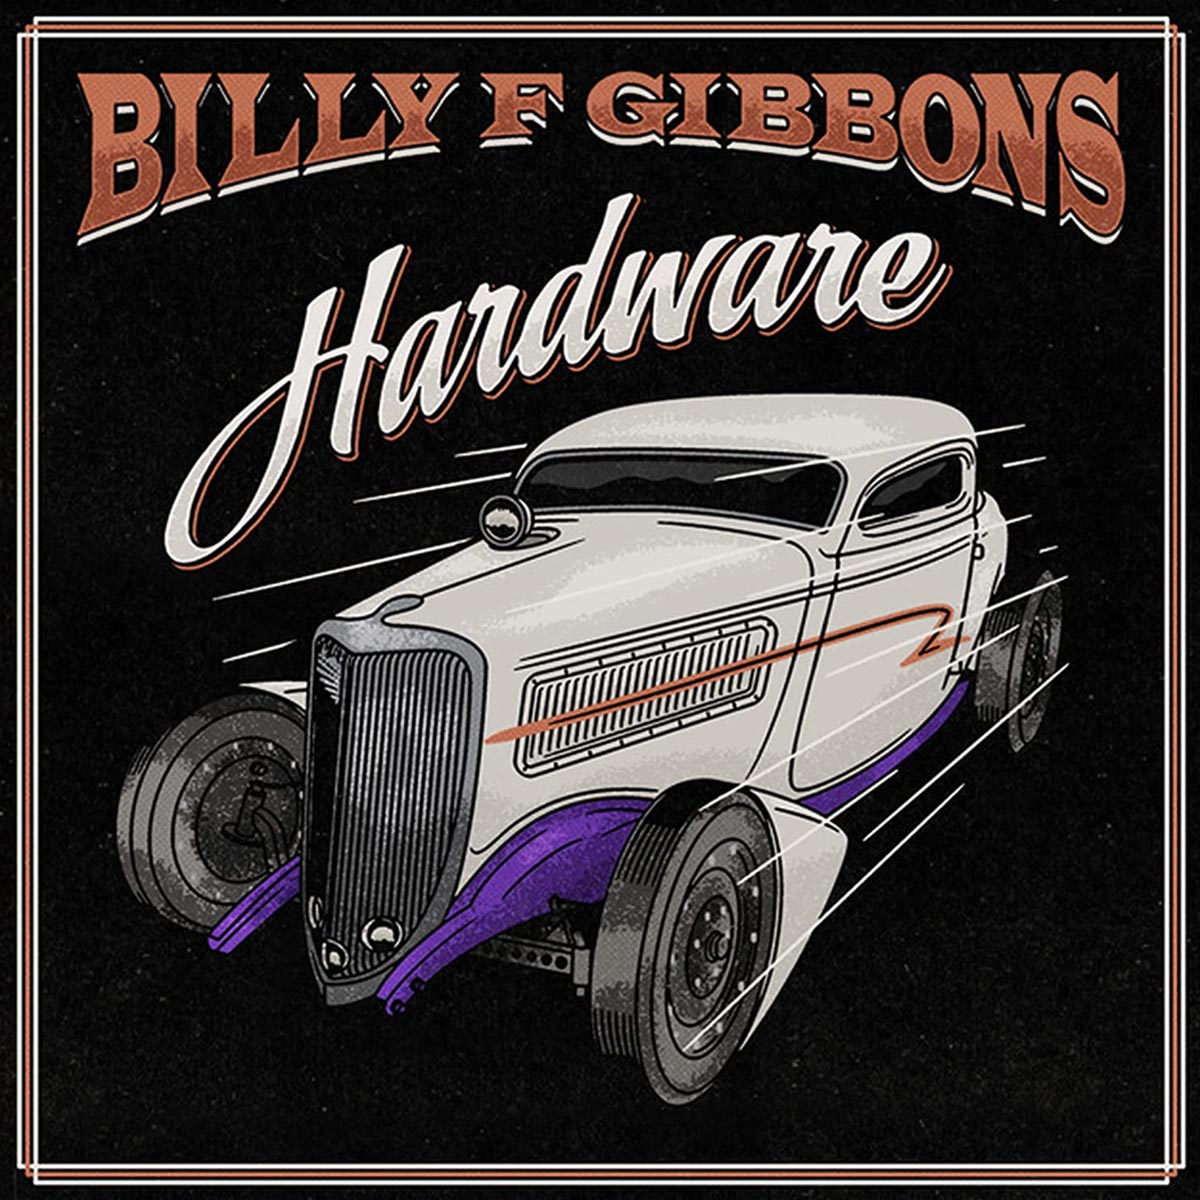 Gibbons Billy F: Hardware